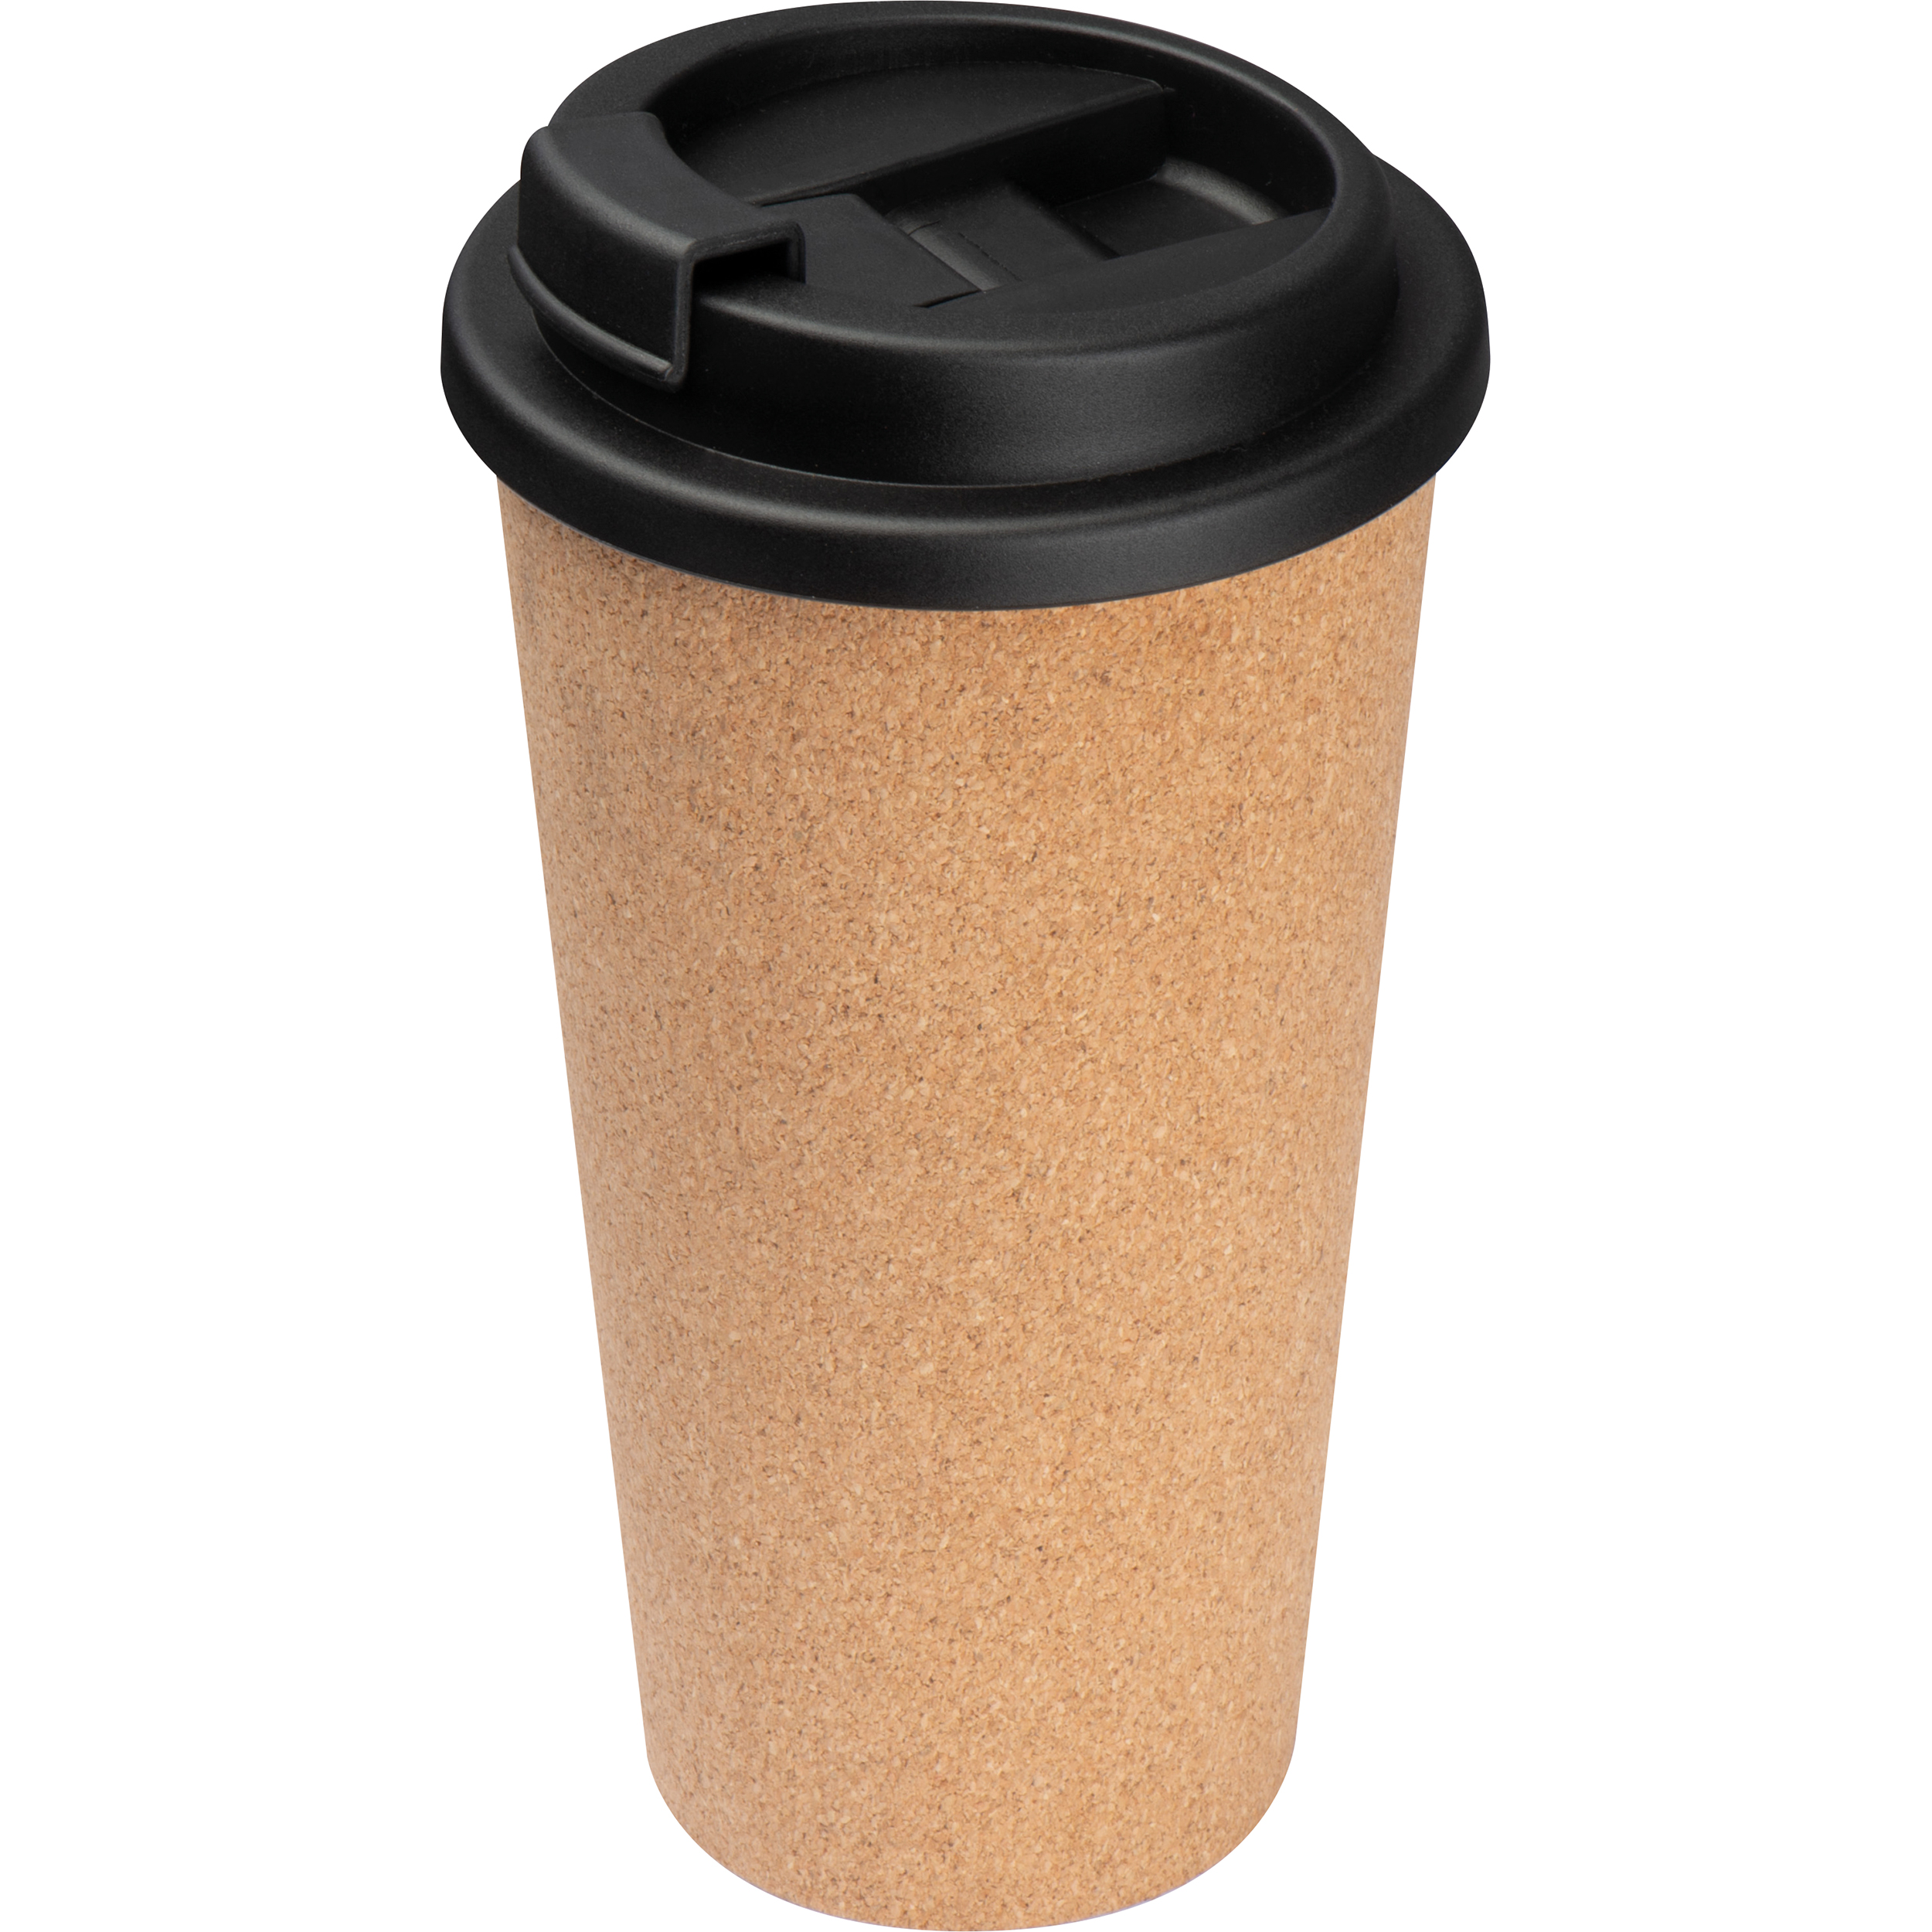 Cup with cork lid - Ashton-under-Lyne - Llandudno Junction